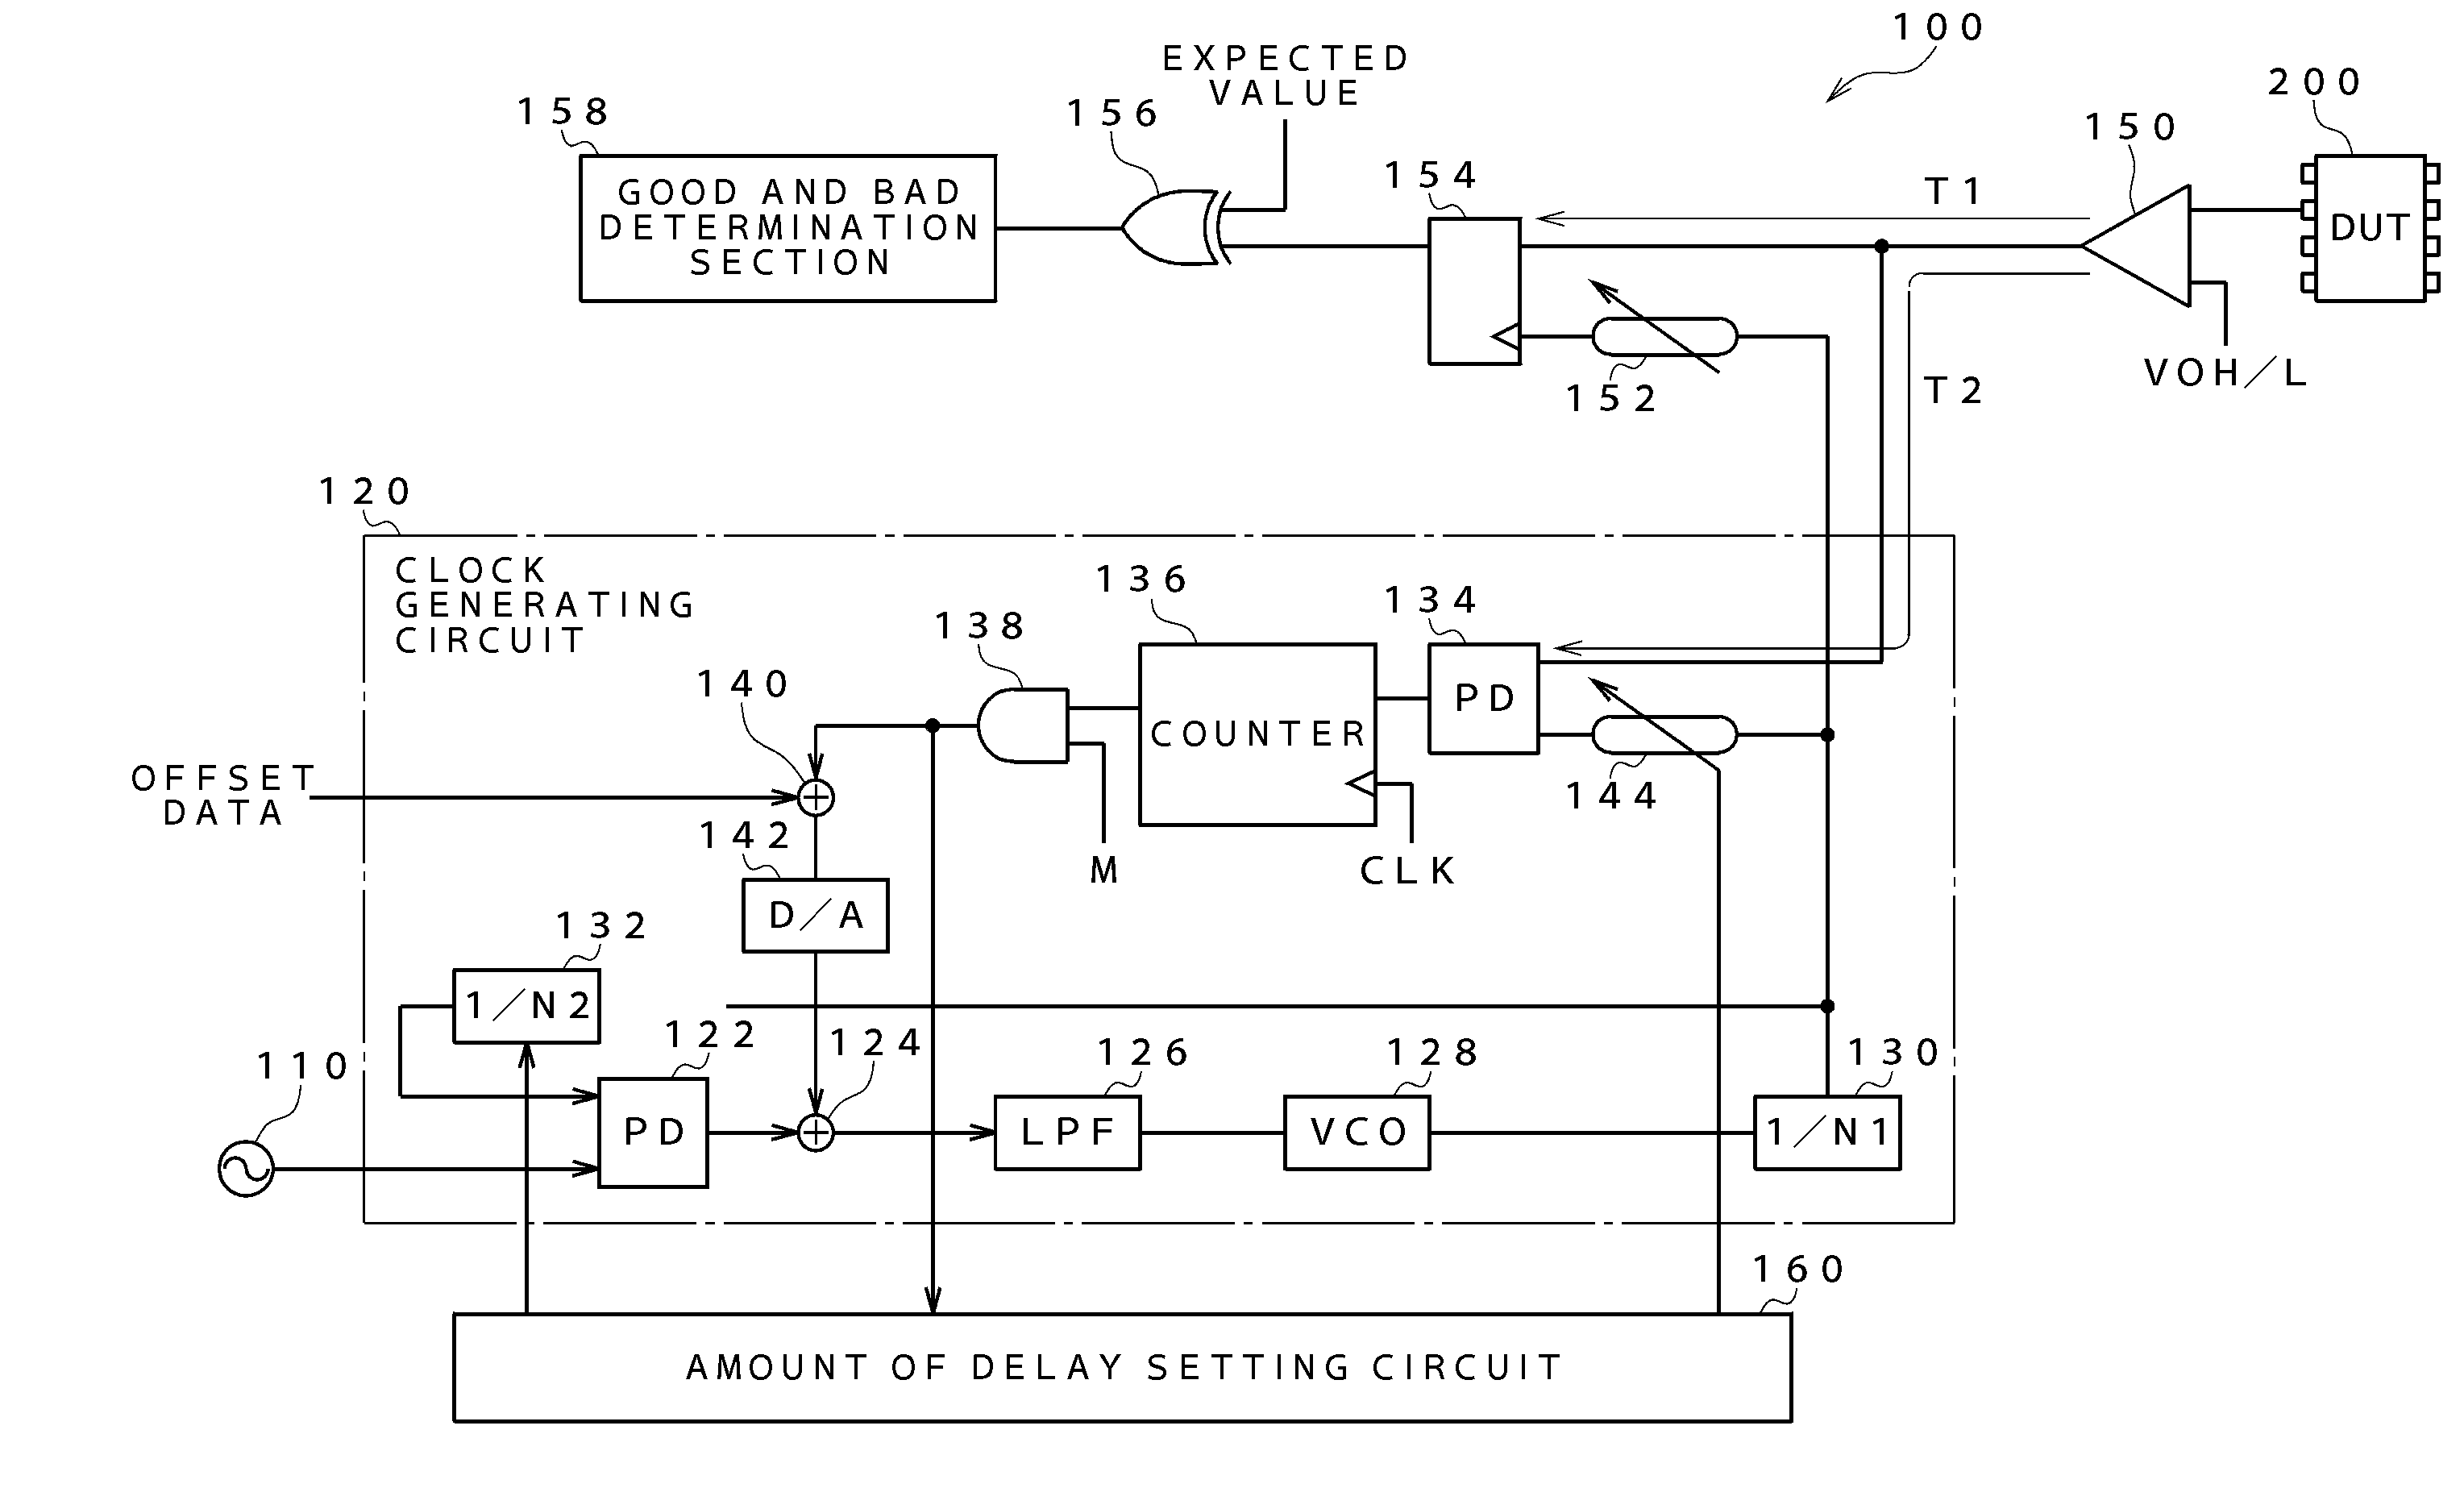 Semiconductor testing apparatus